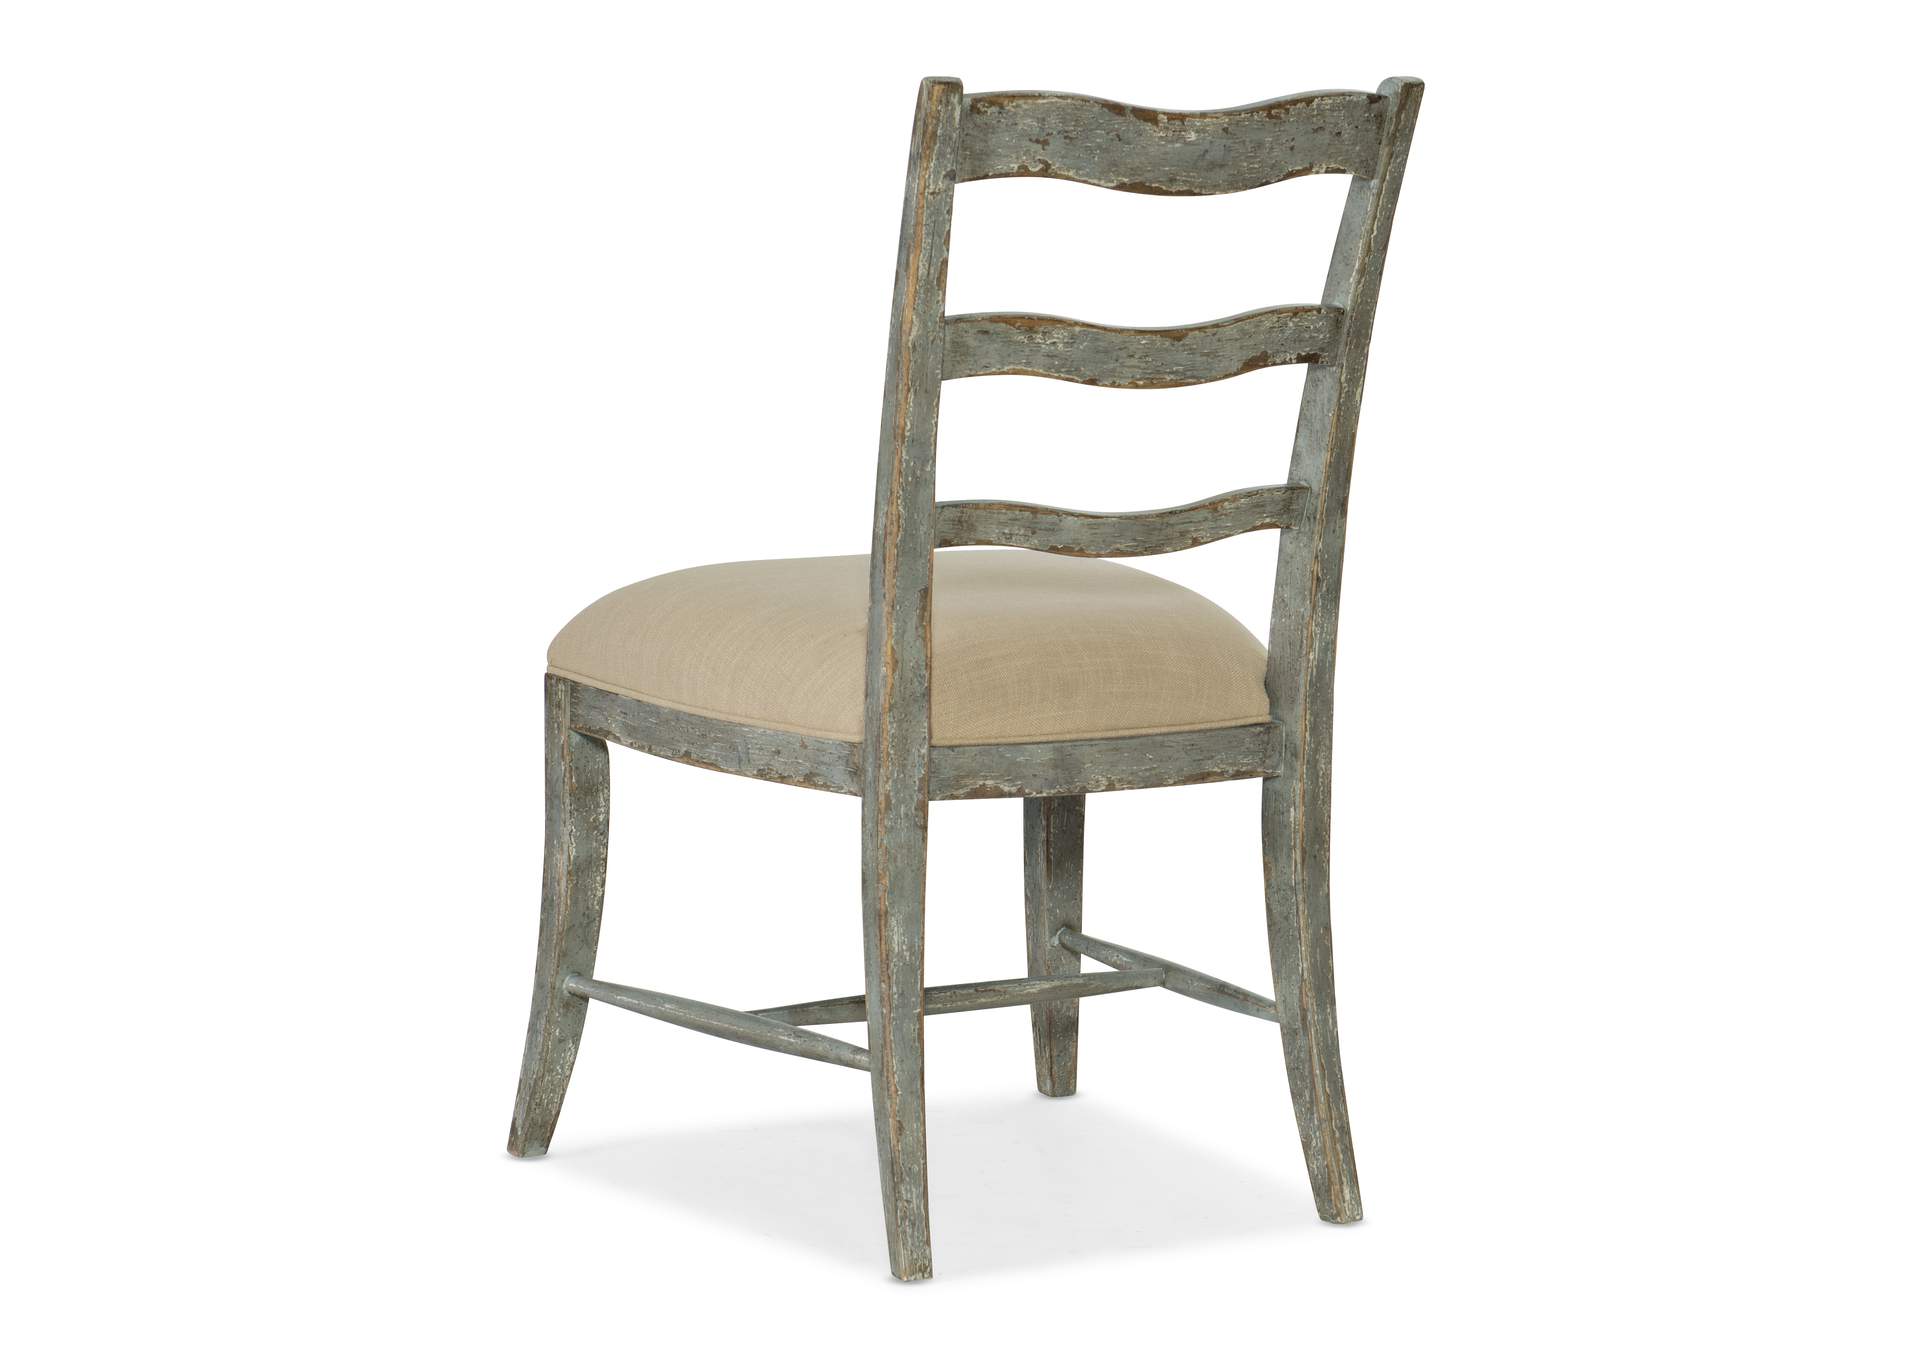 Alfresco La Riva Upholstered Seat Side Chair - 2 Per Carton - Price Ea,Hooker Furniture